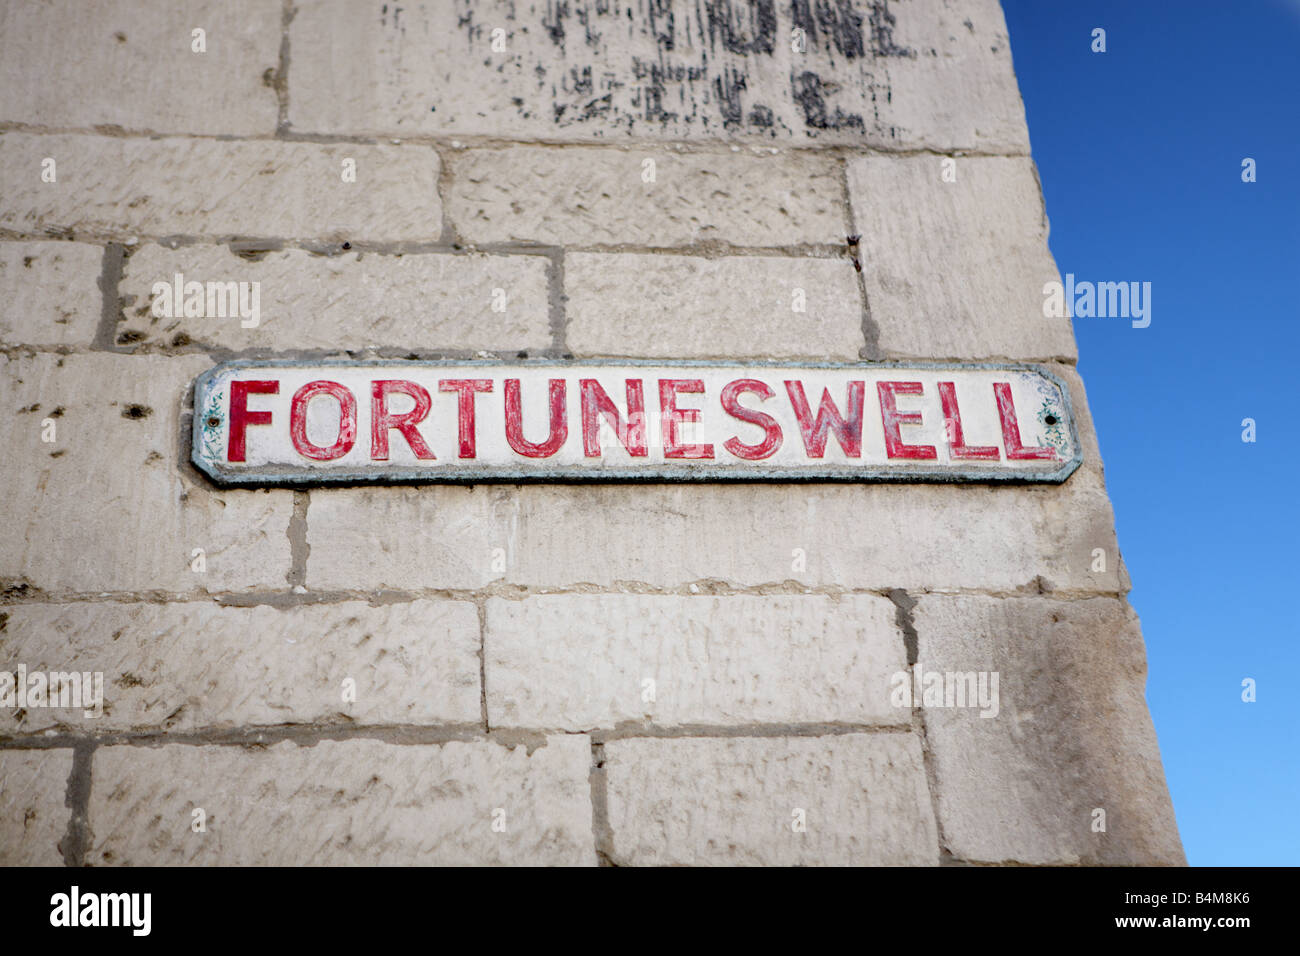 Fortuneswell street sign, Portland, Dorset, England, UK Banque D'Images